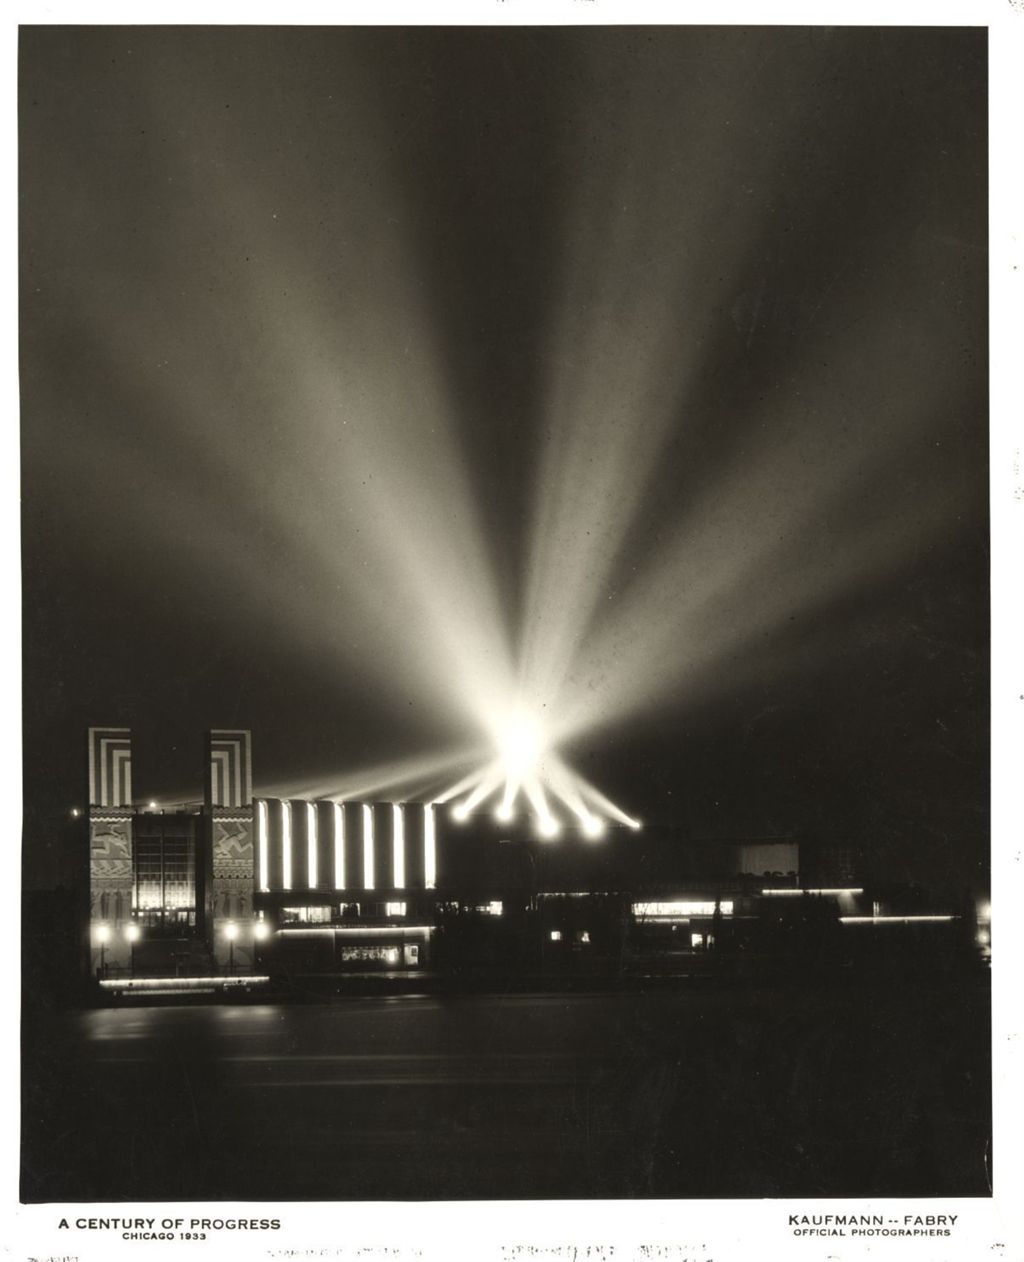 Miniature of The Century of Progress International Exposition, illuminated at night by searchlights.